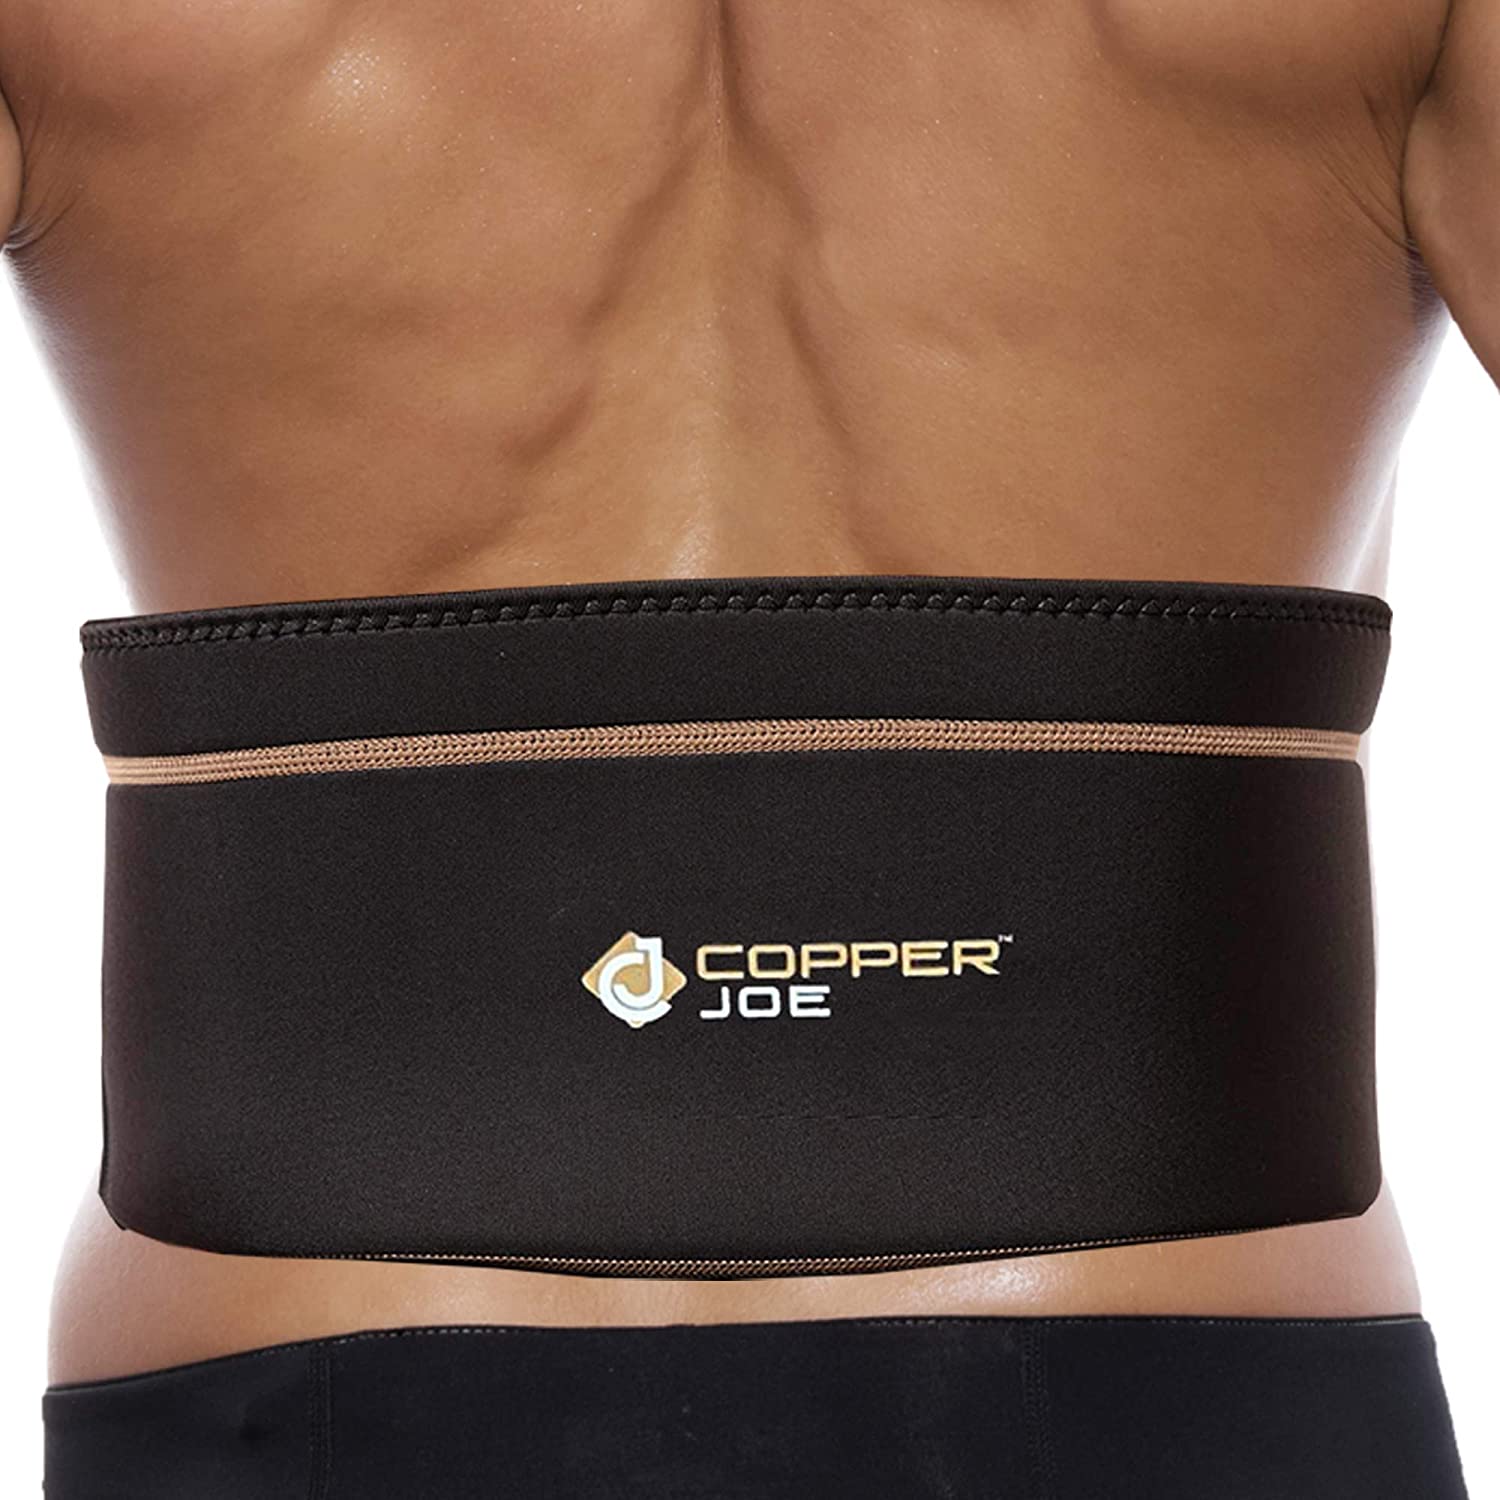 Back Brace Lumbar Back Support Belt for Lower Back Pain Relief - Waist  Trainer Belt for Men